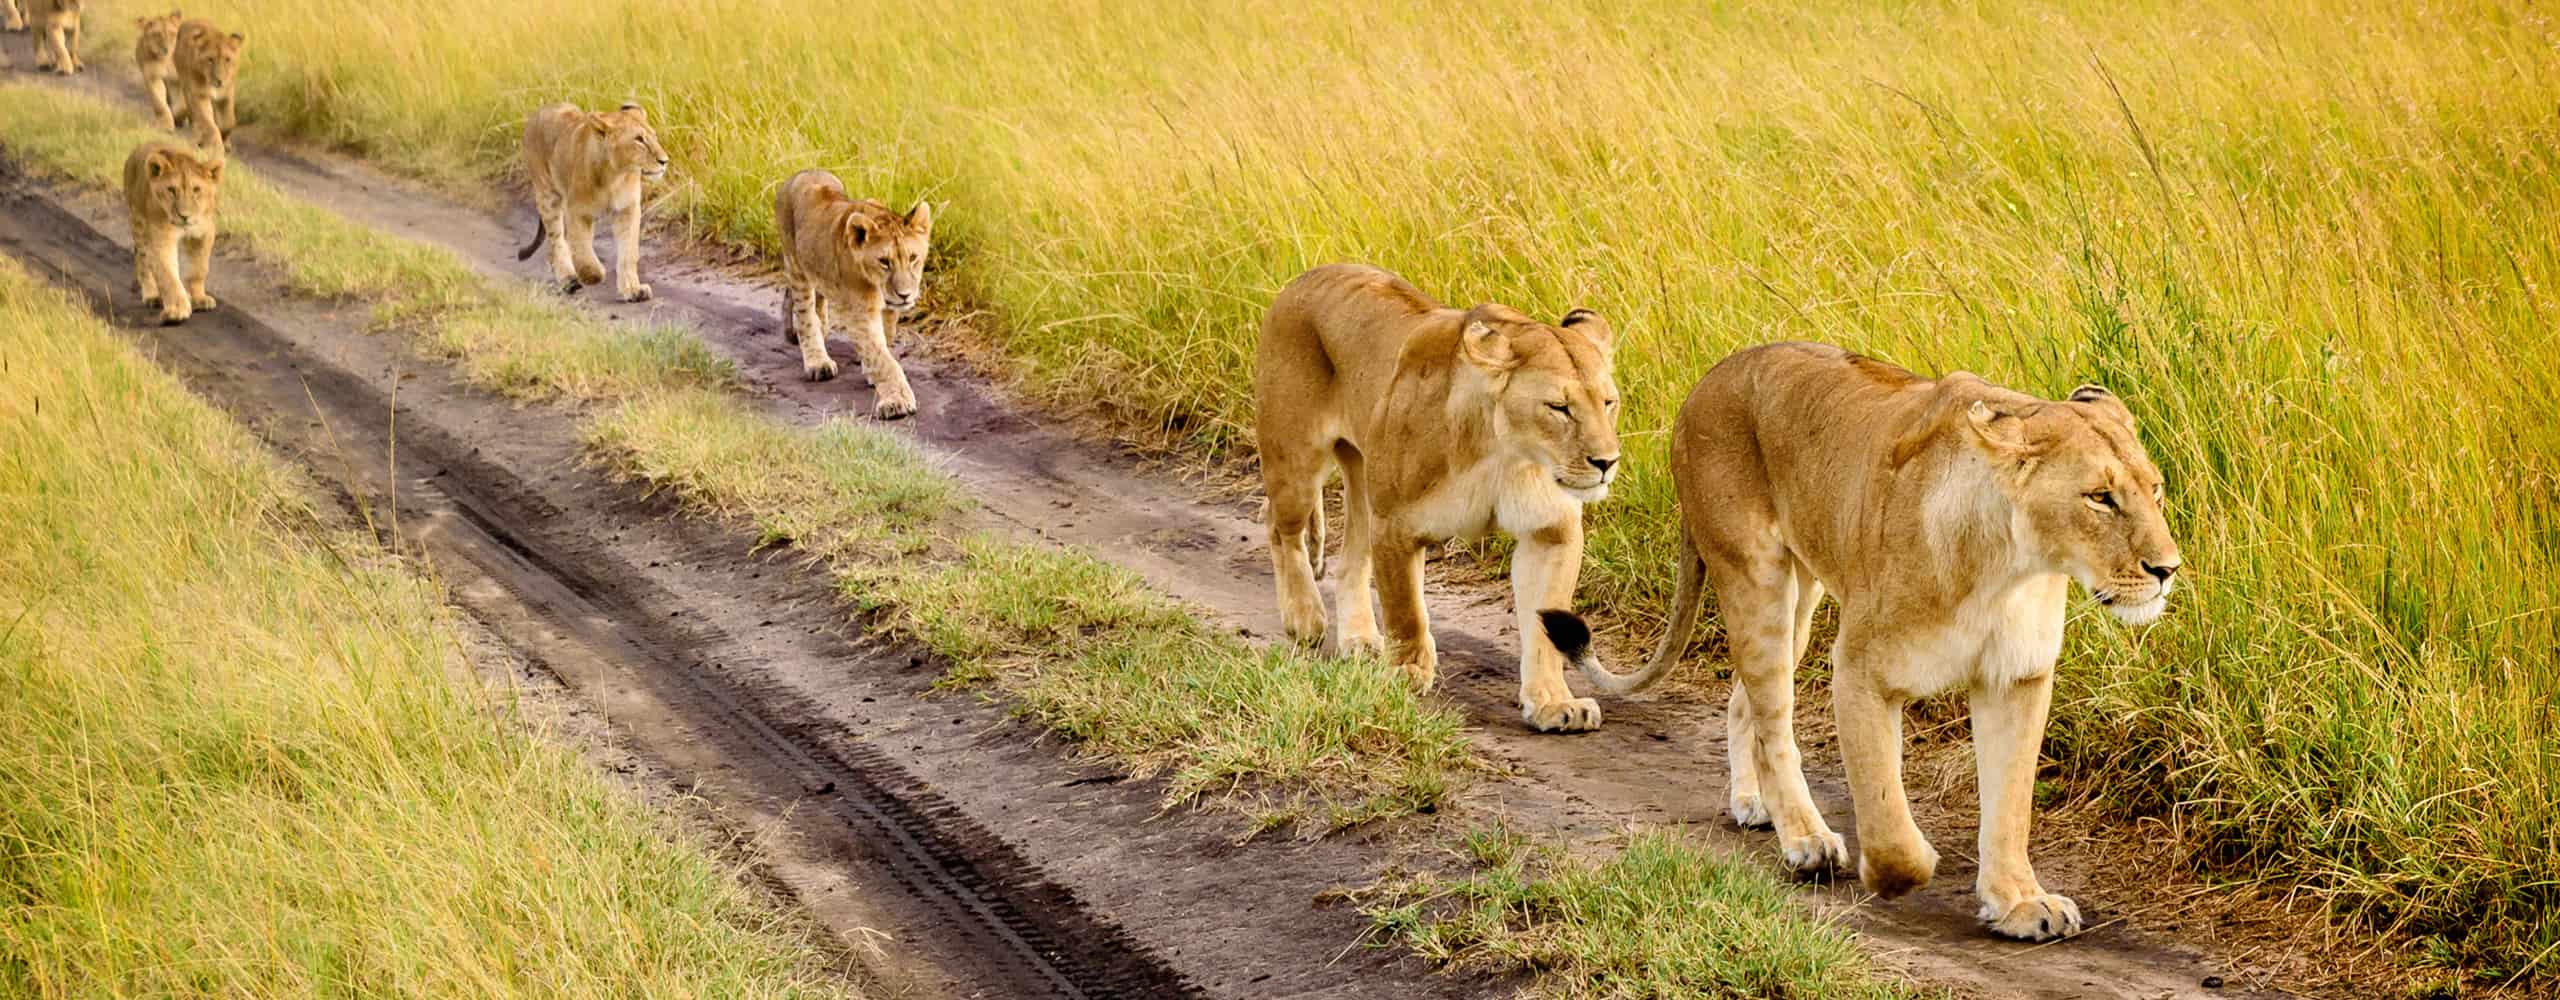 Lions In The Serengeti, Tanzania